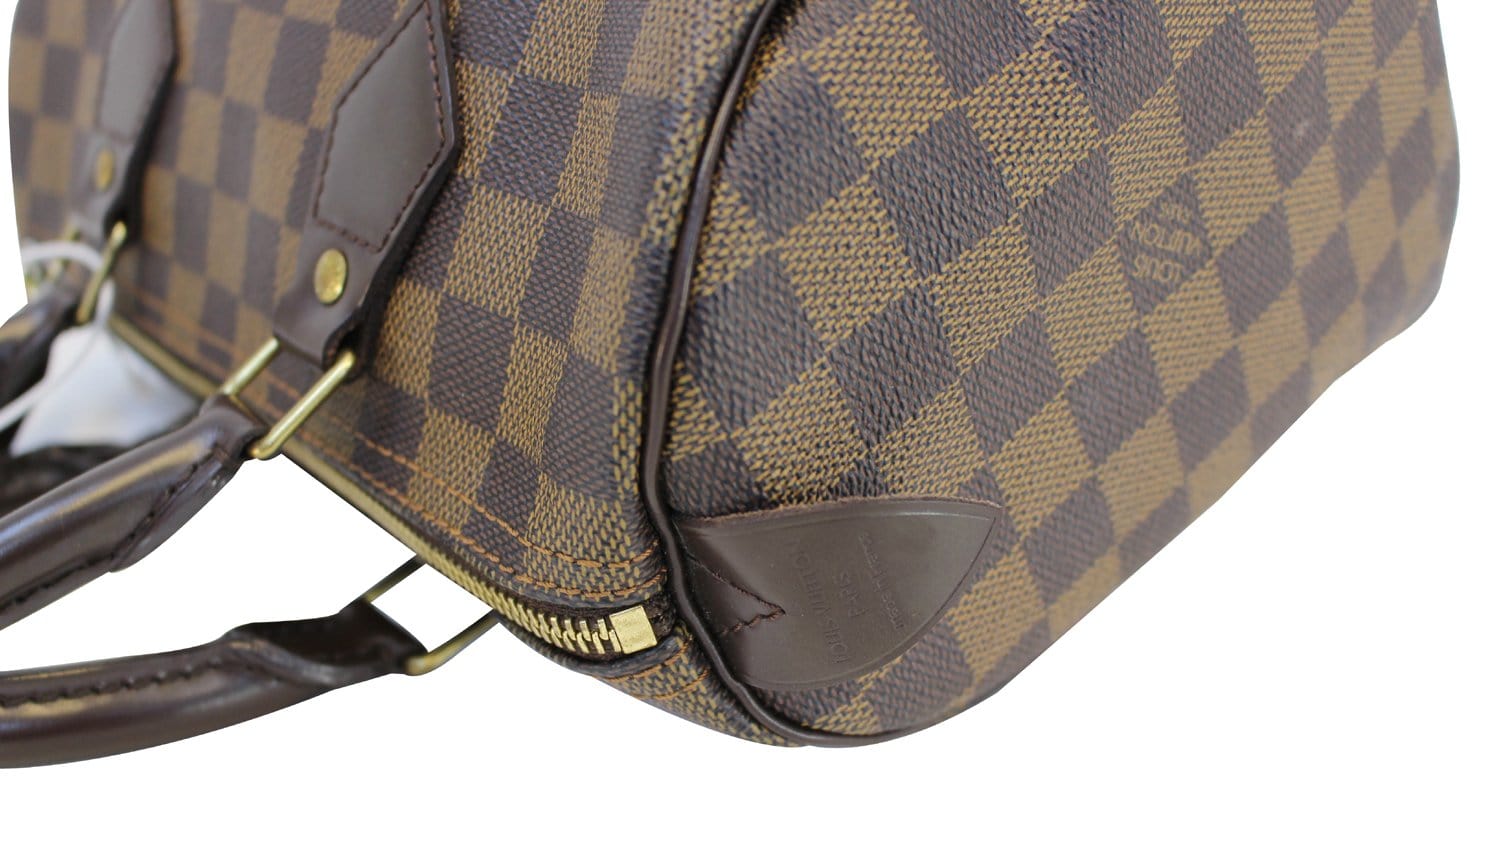 Authentic Louis Vuitton Speedy 25 Damier Ebene Handbag - general